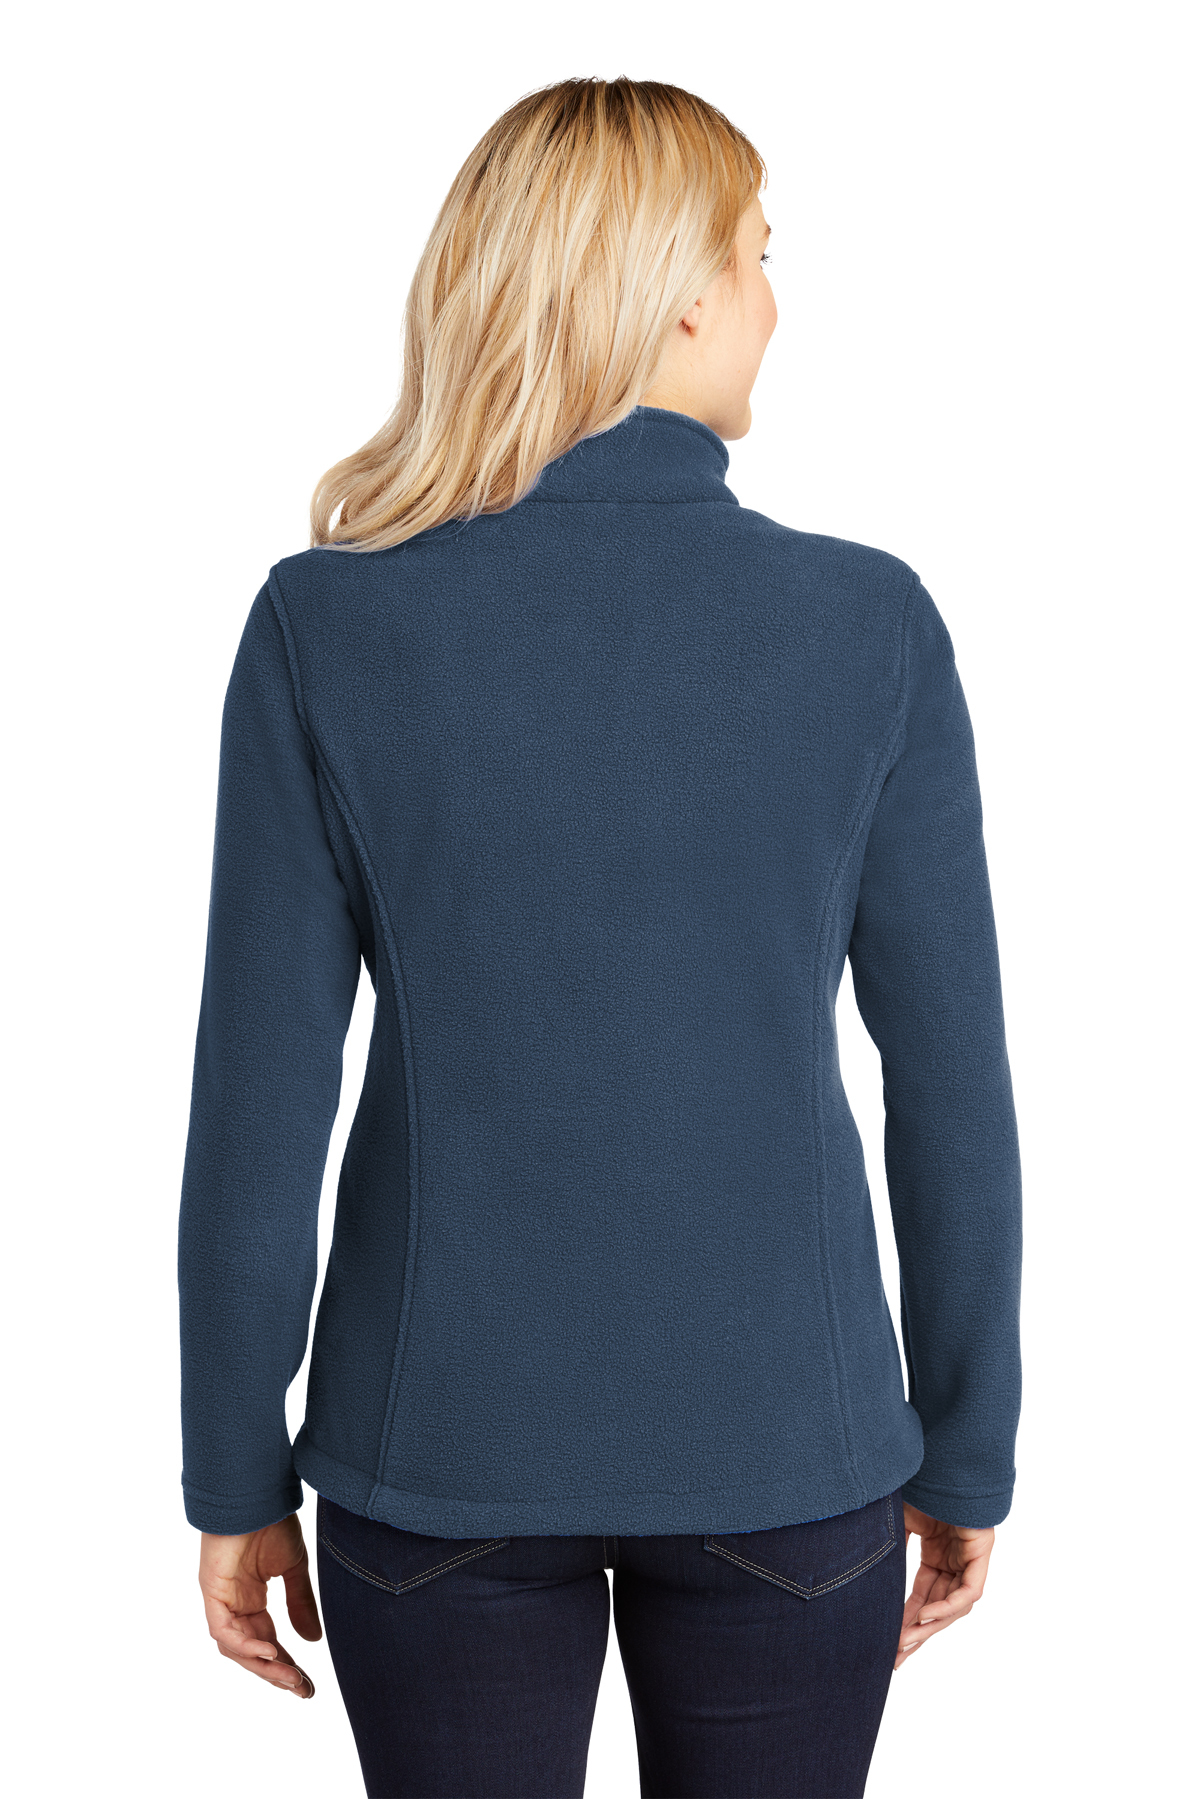 Port Authority Ladies Value Fleece Jacket | Product | Port Authority